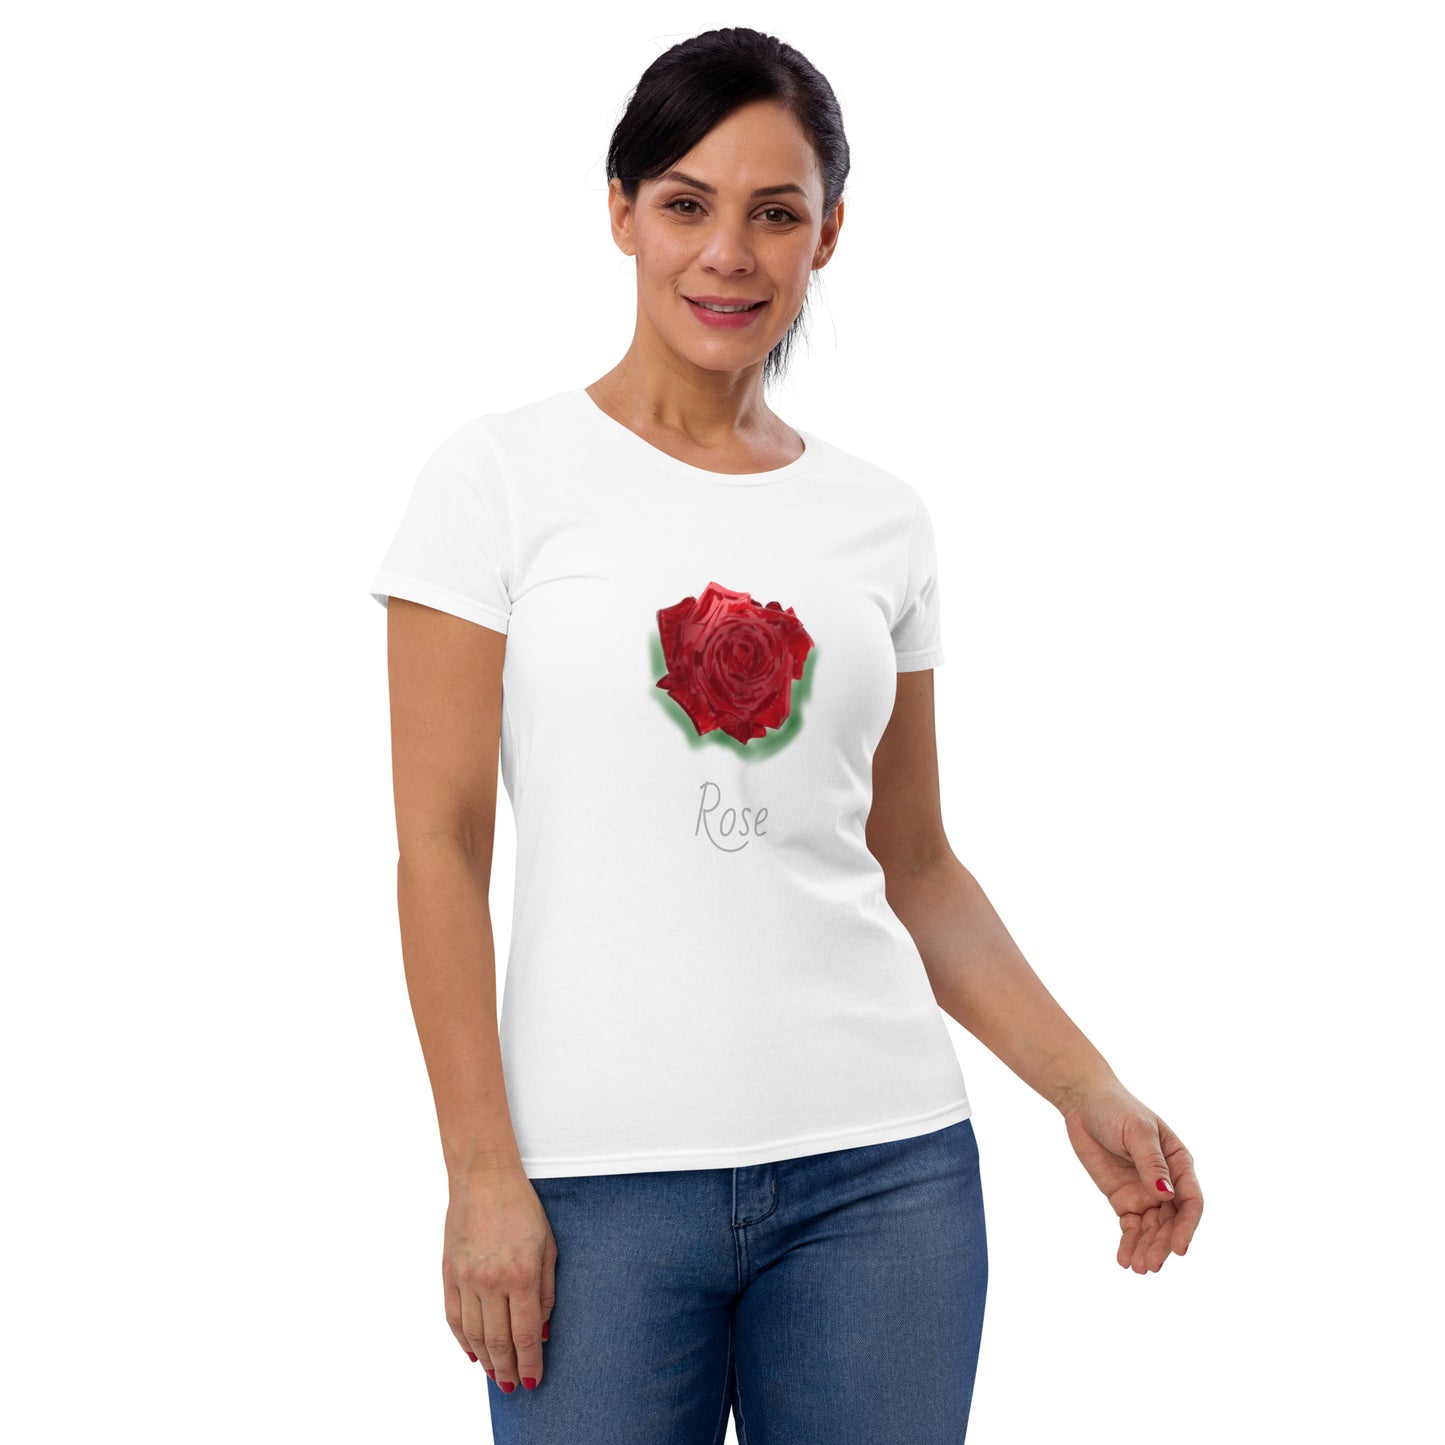 Flowers on Parade: Rose Women's short sleeve t-shirt